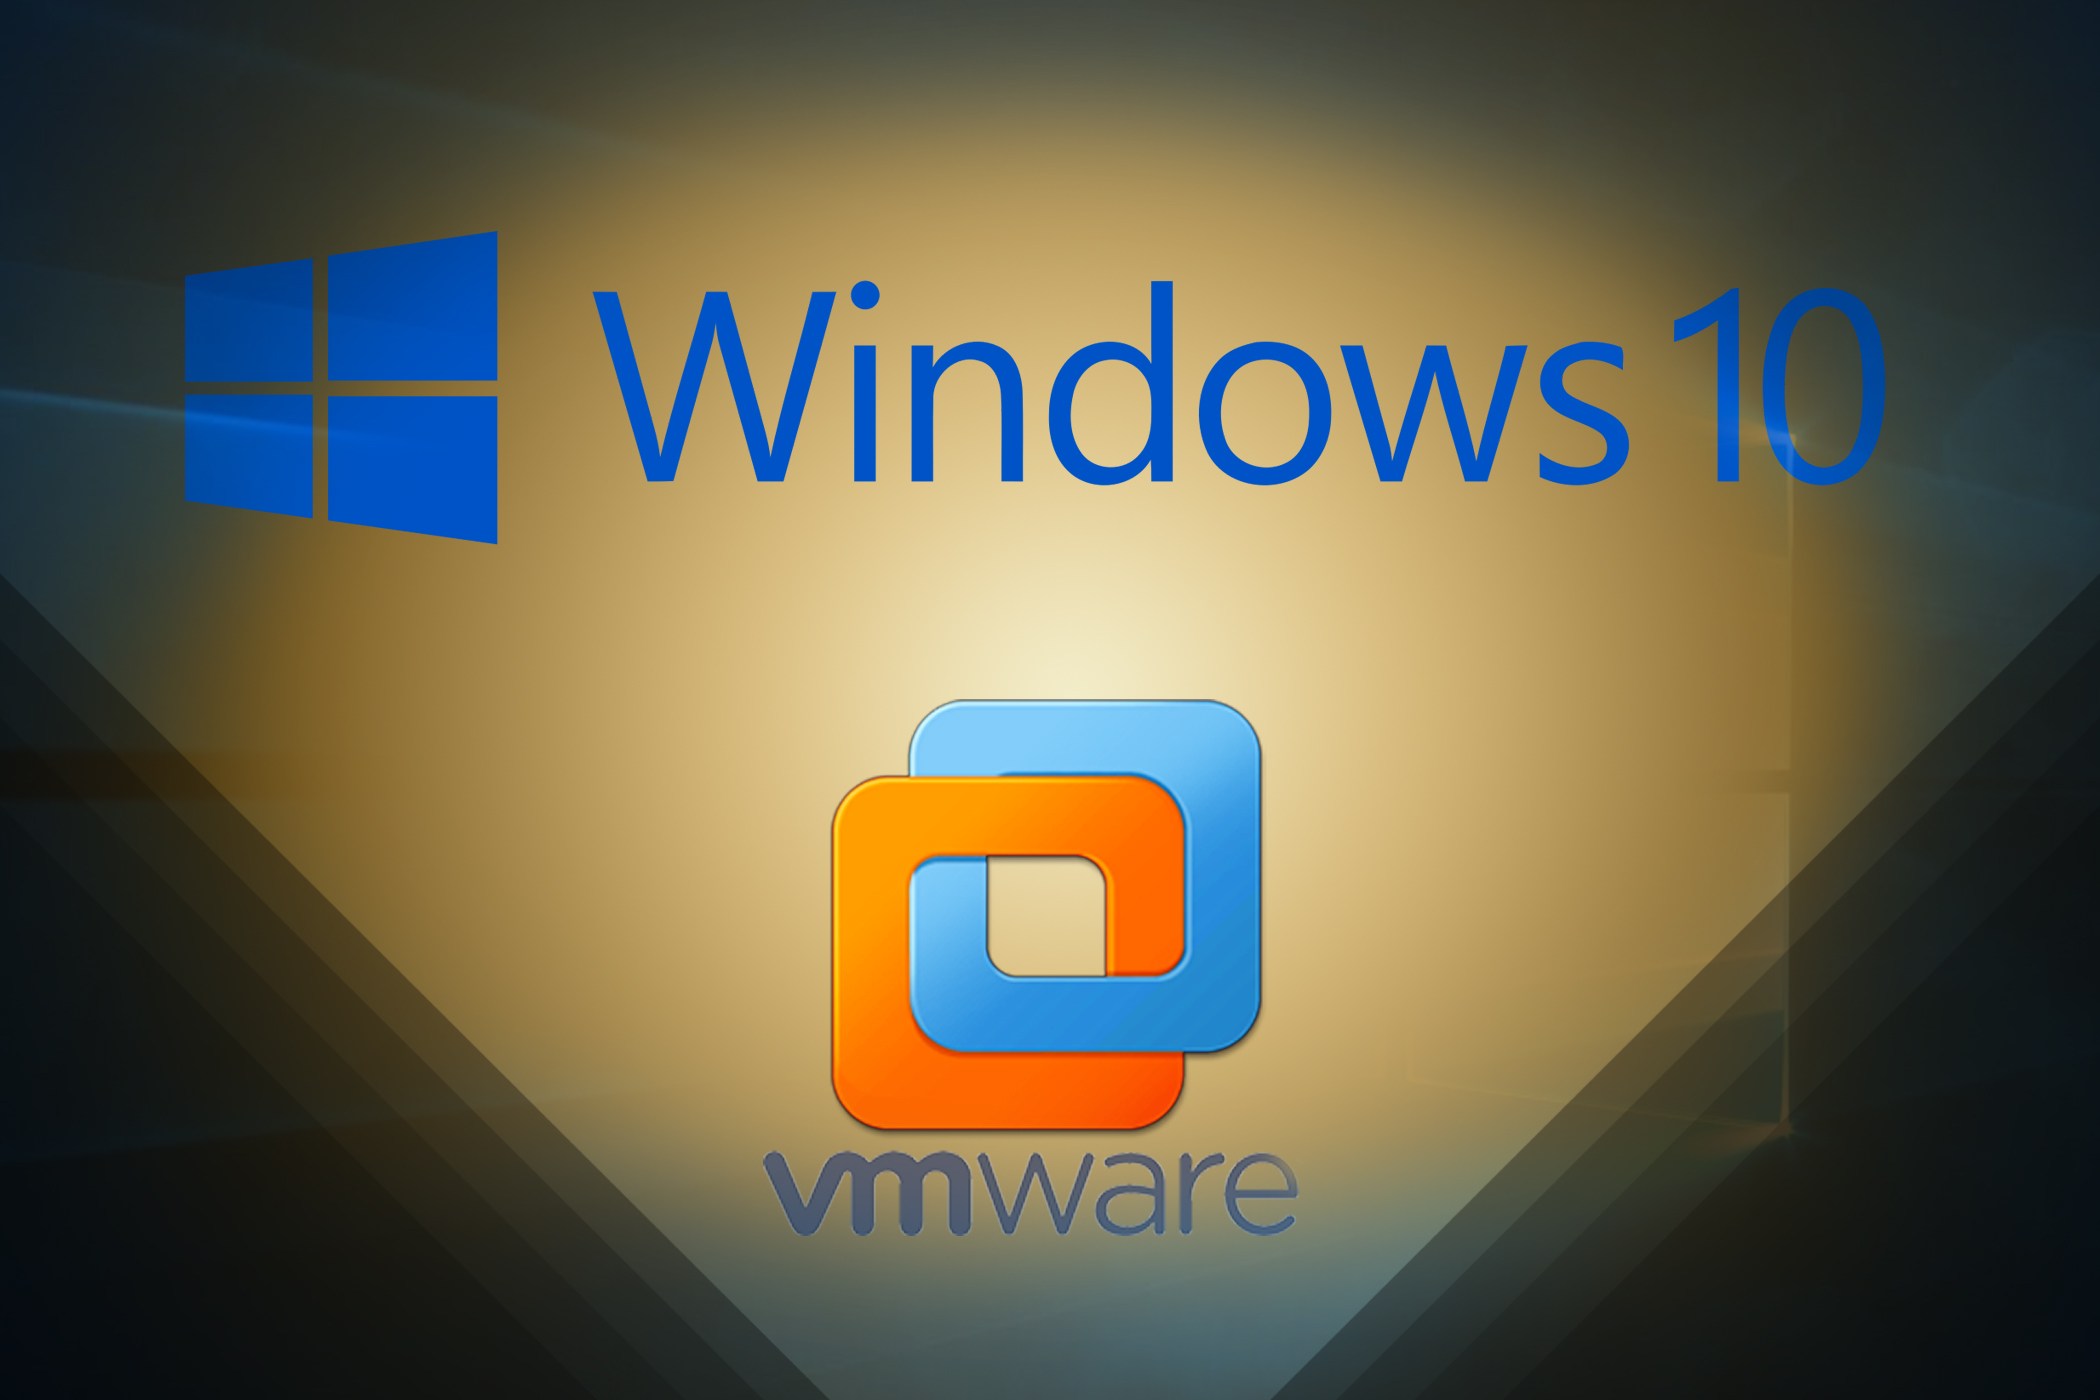 vmware workstation download for windows 10